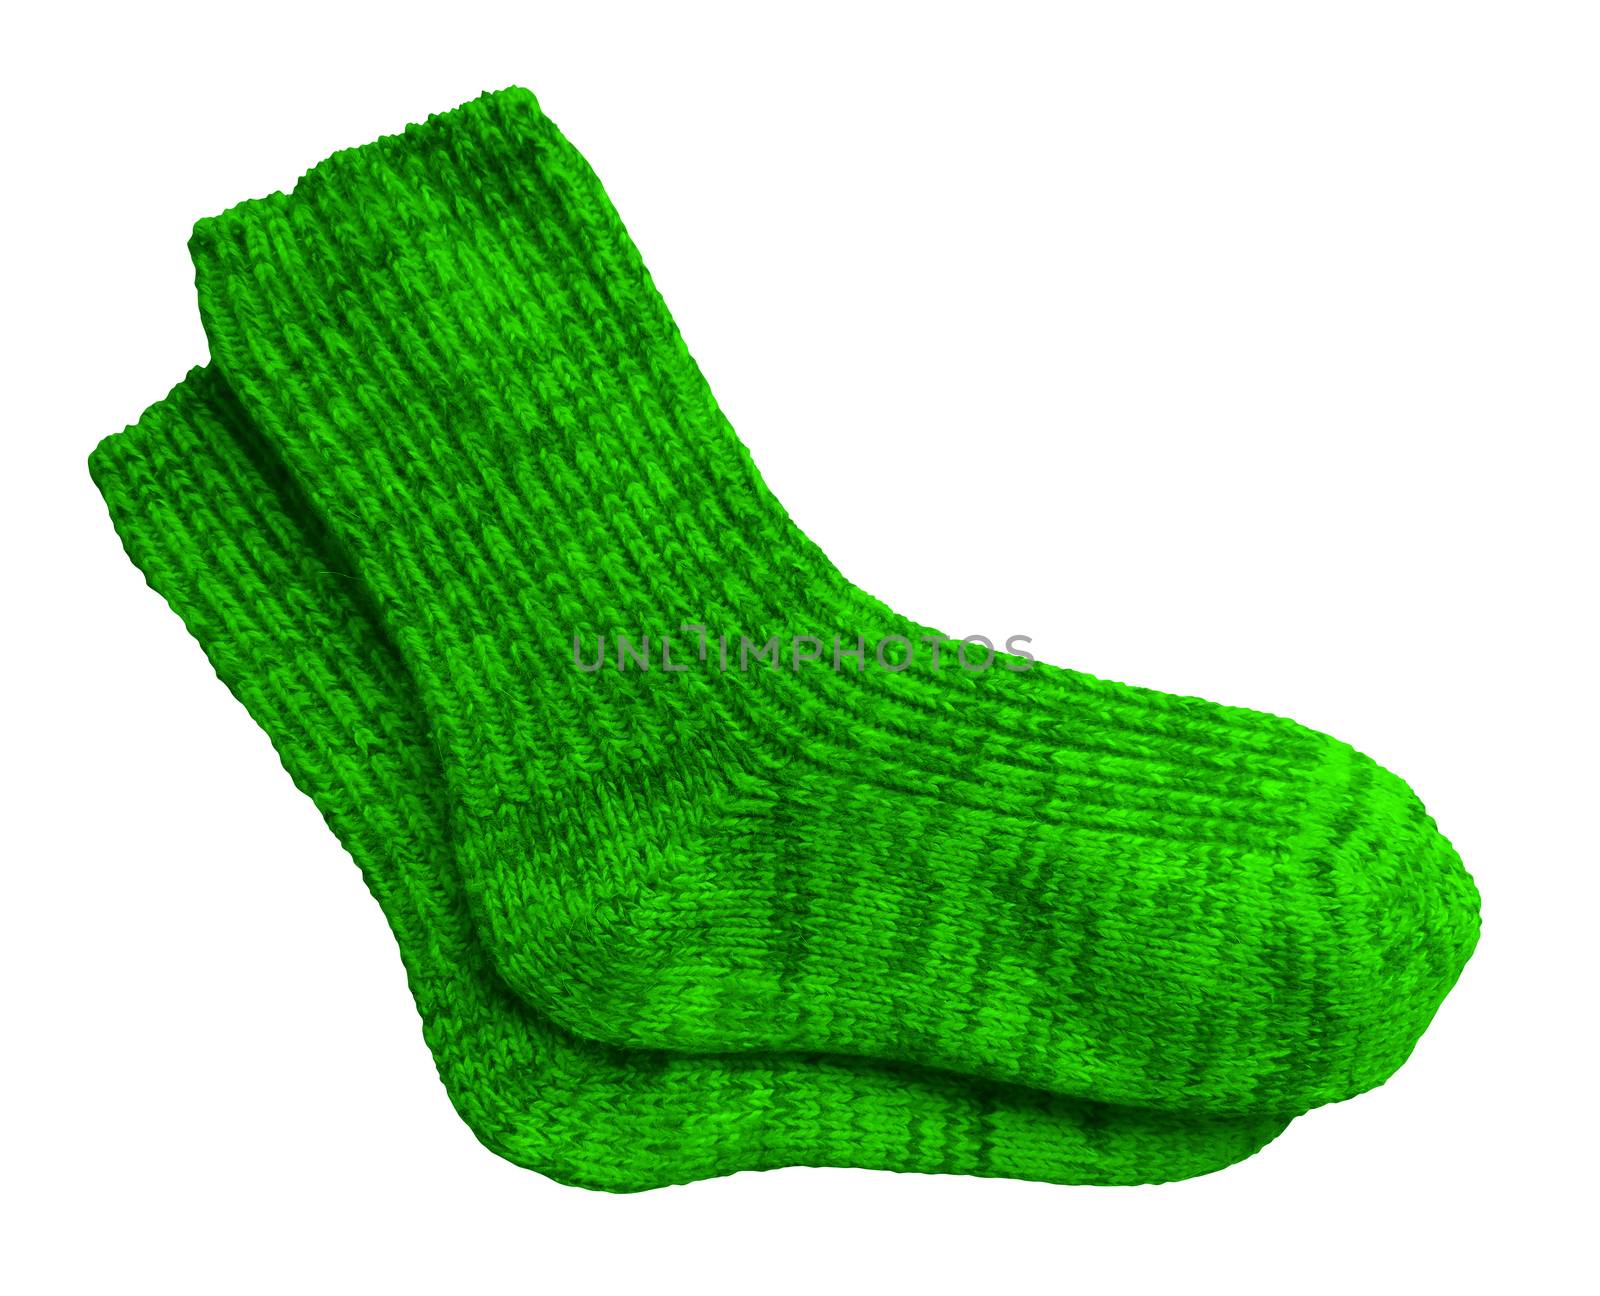 Woolen socks isolated - green by Venakr